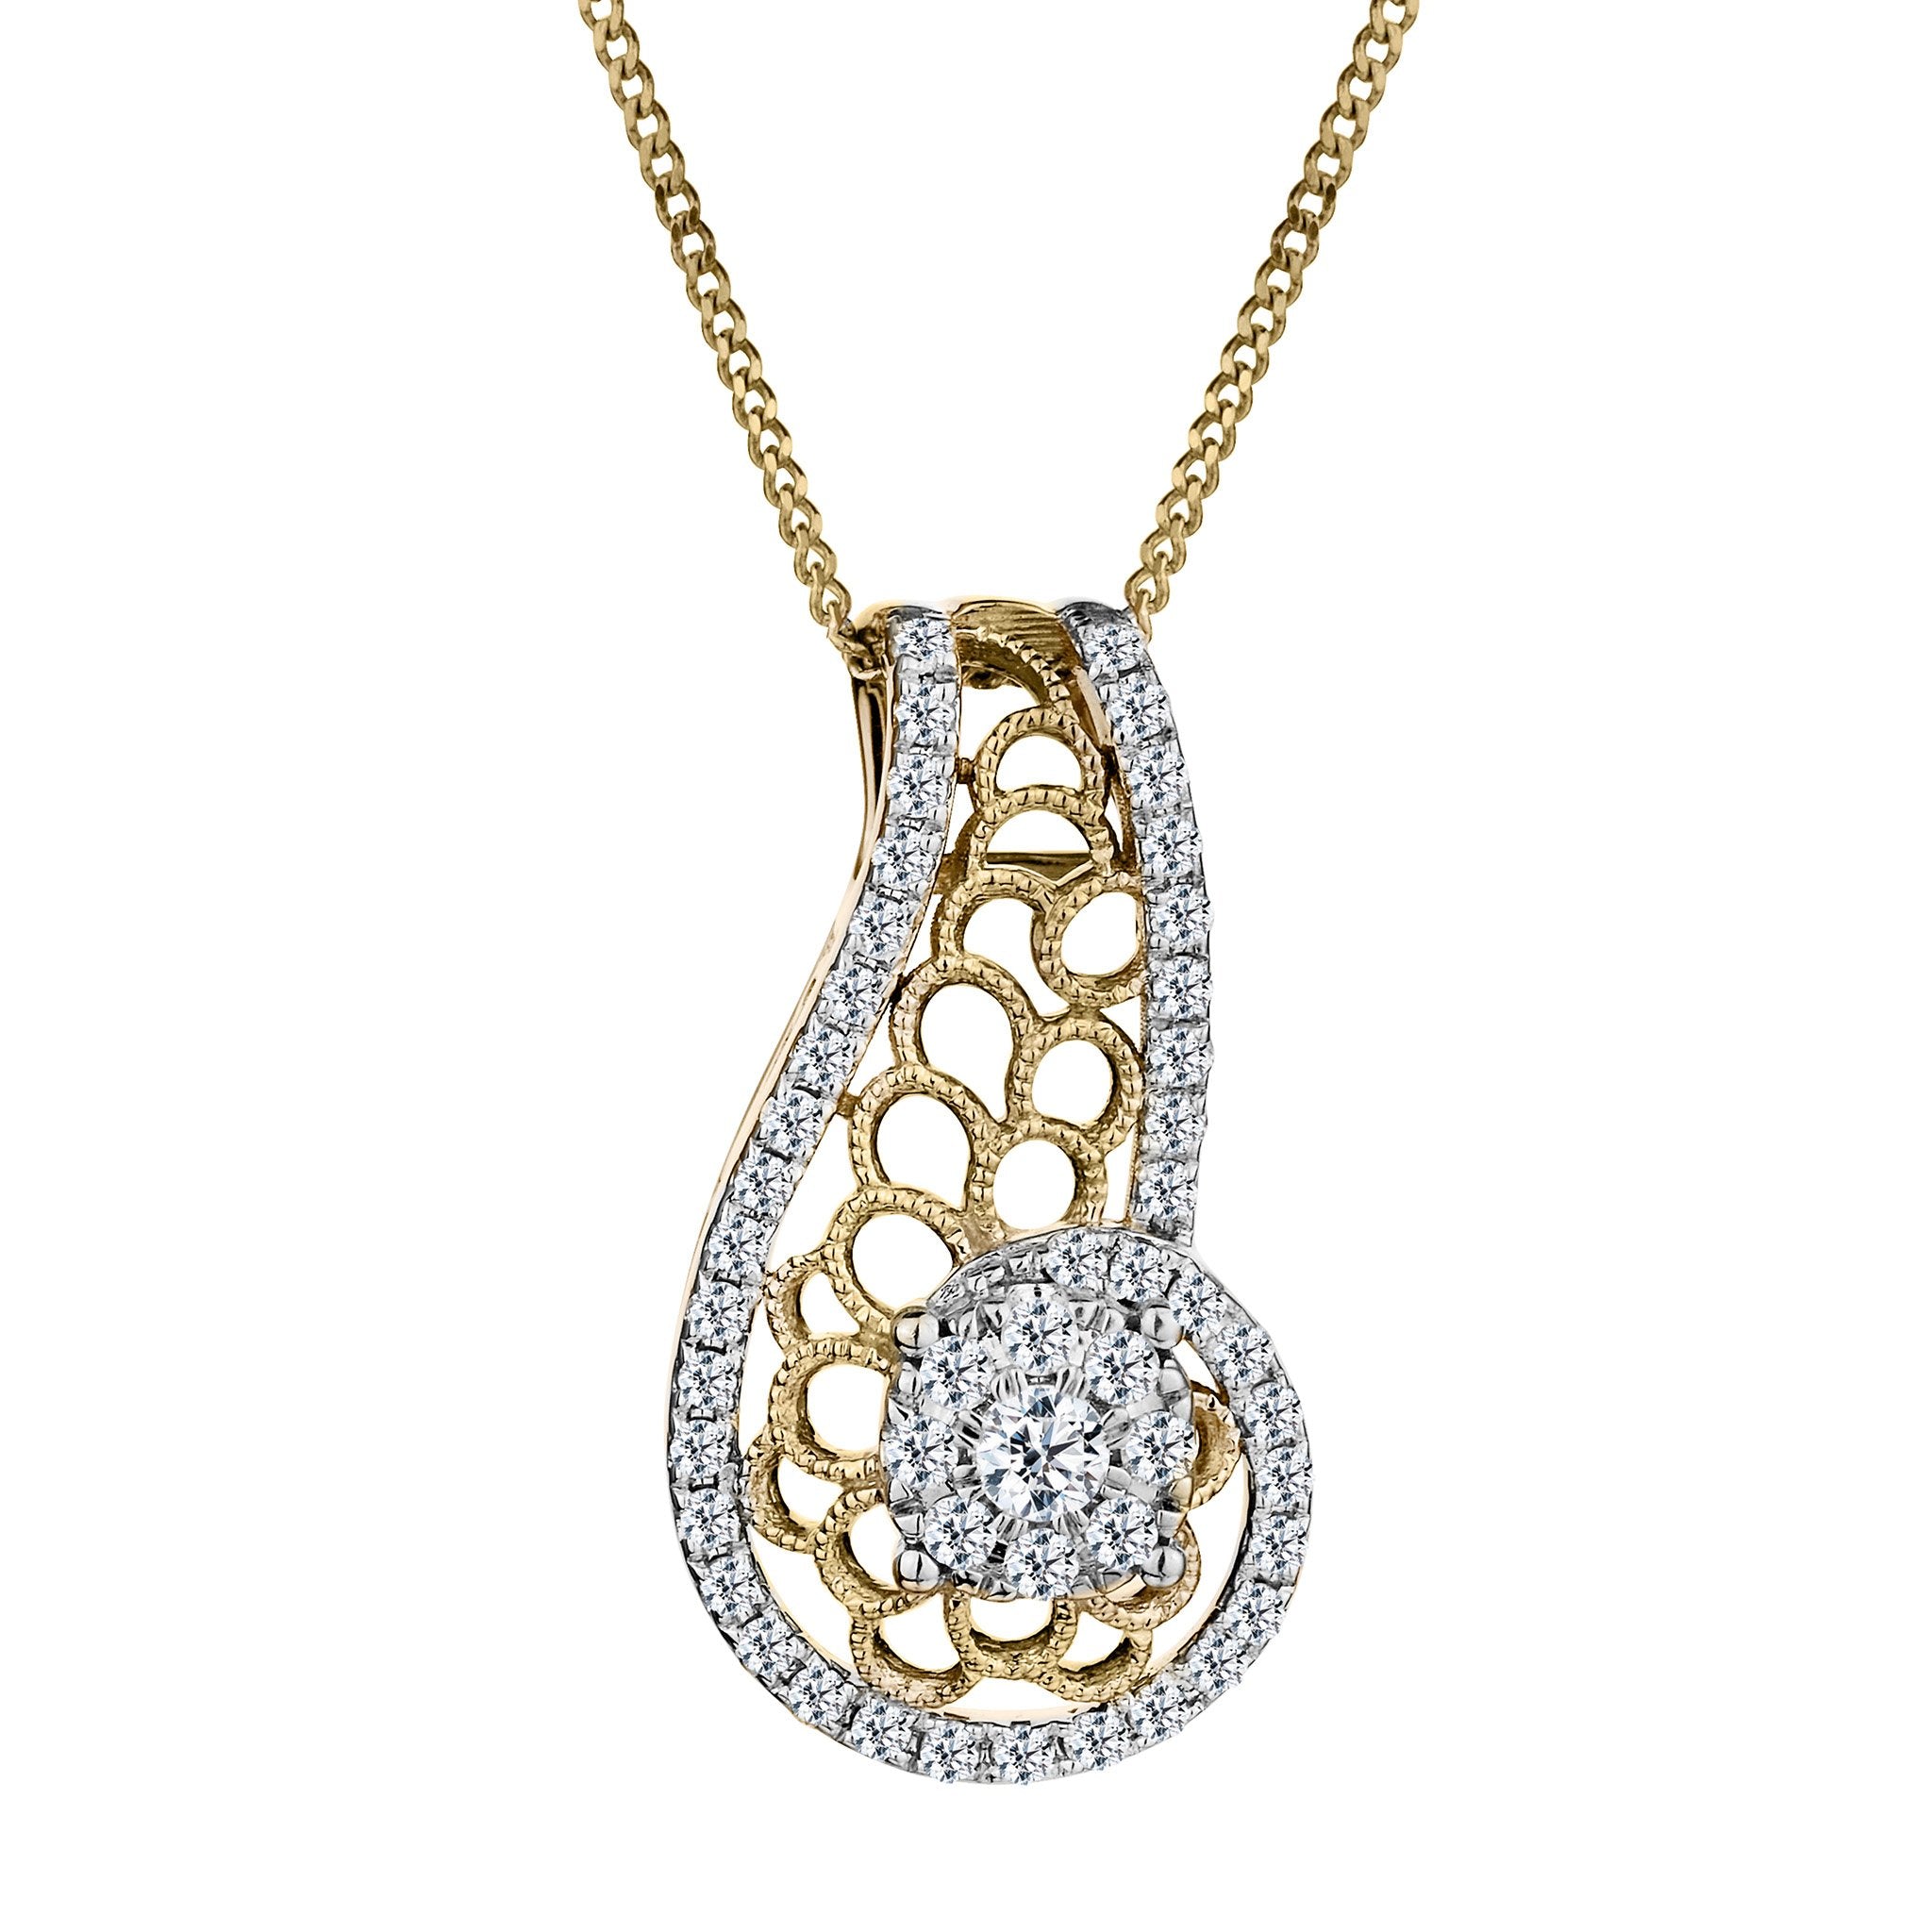 .33 Carat Diamond "Sunrise" Pendant,  10kt Yellow Gold. Necklaces and Pendants. Griffin Jewellery Designs. 